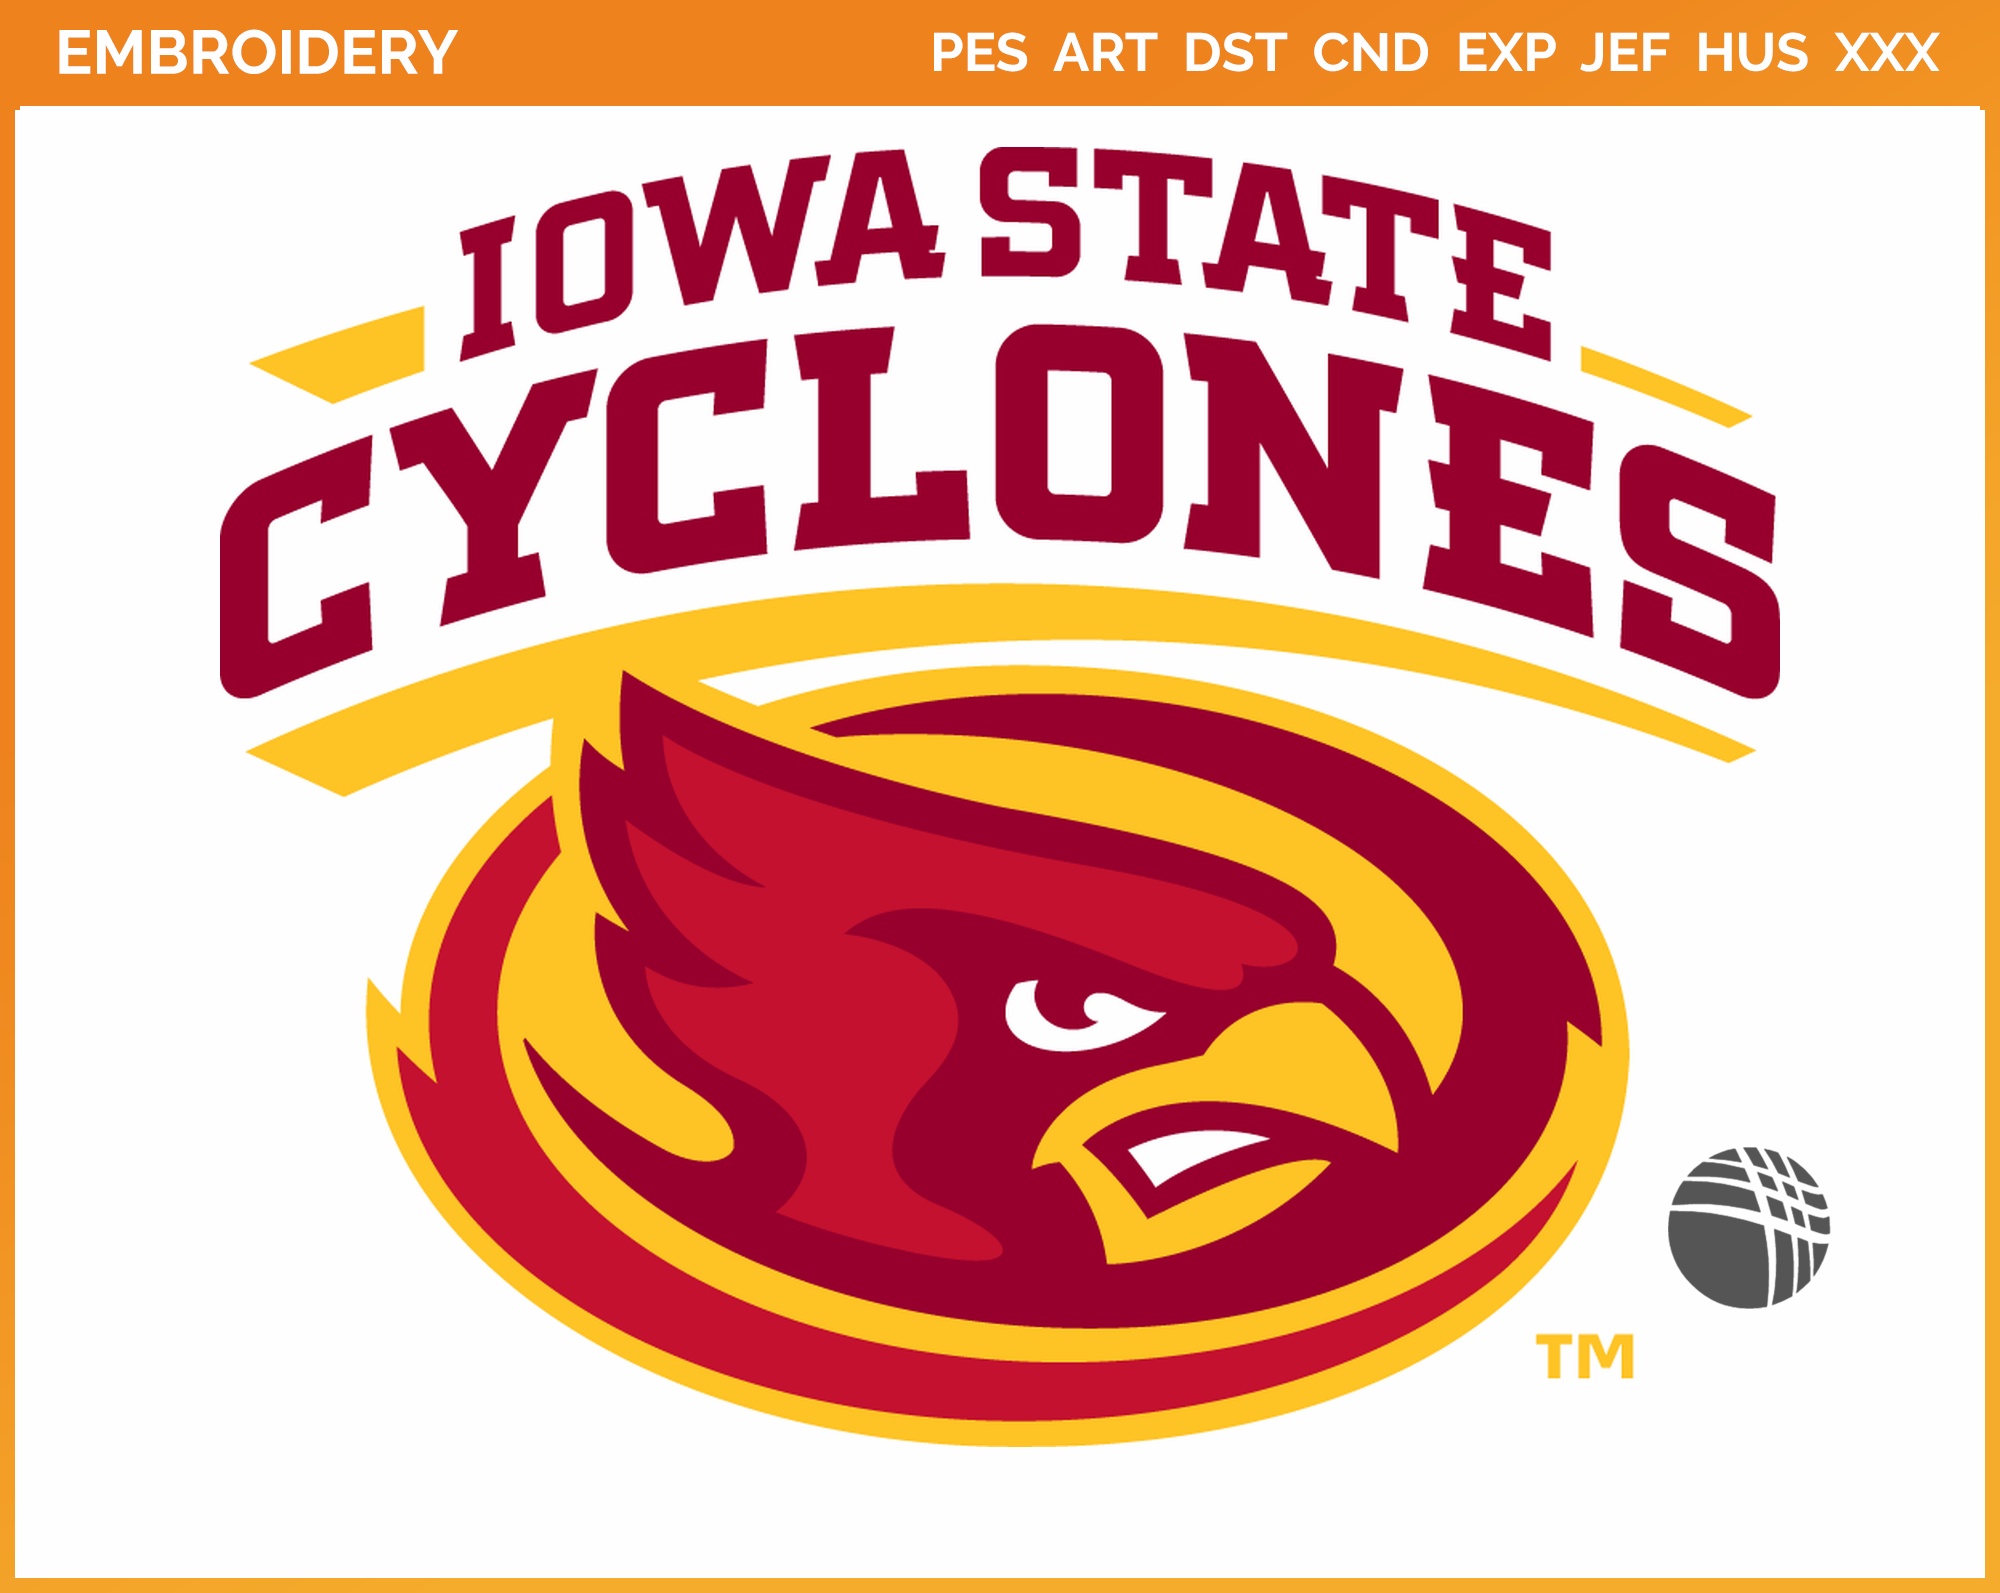 Lids Iowa State Cyclones Dayna Designs Team Logo Silver Post